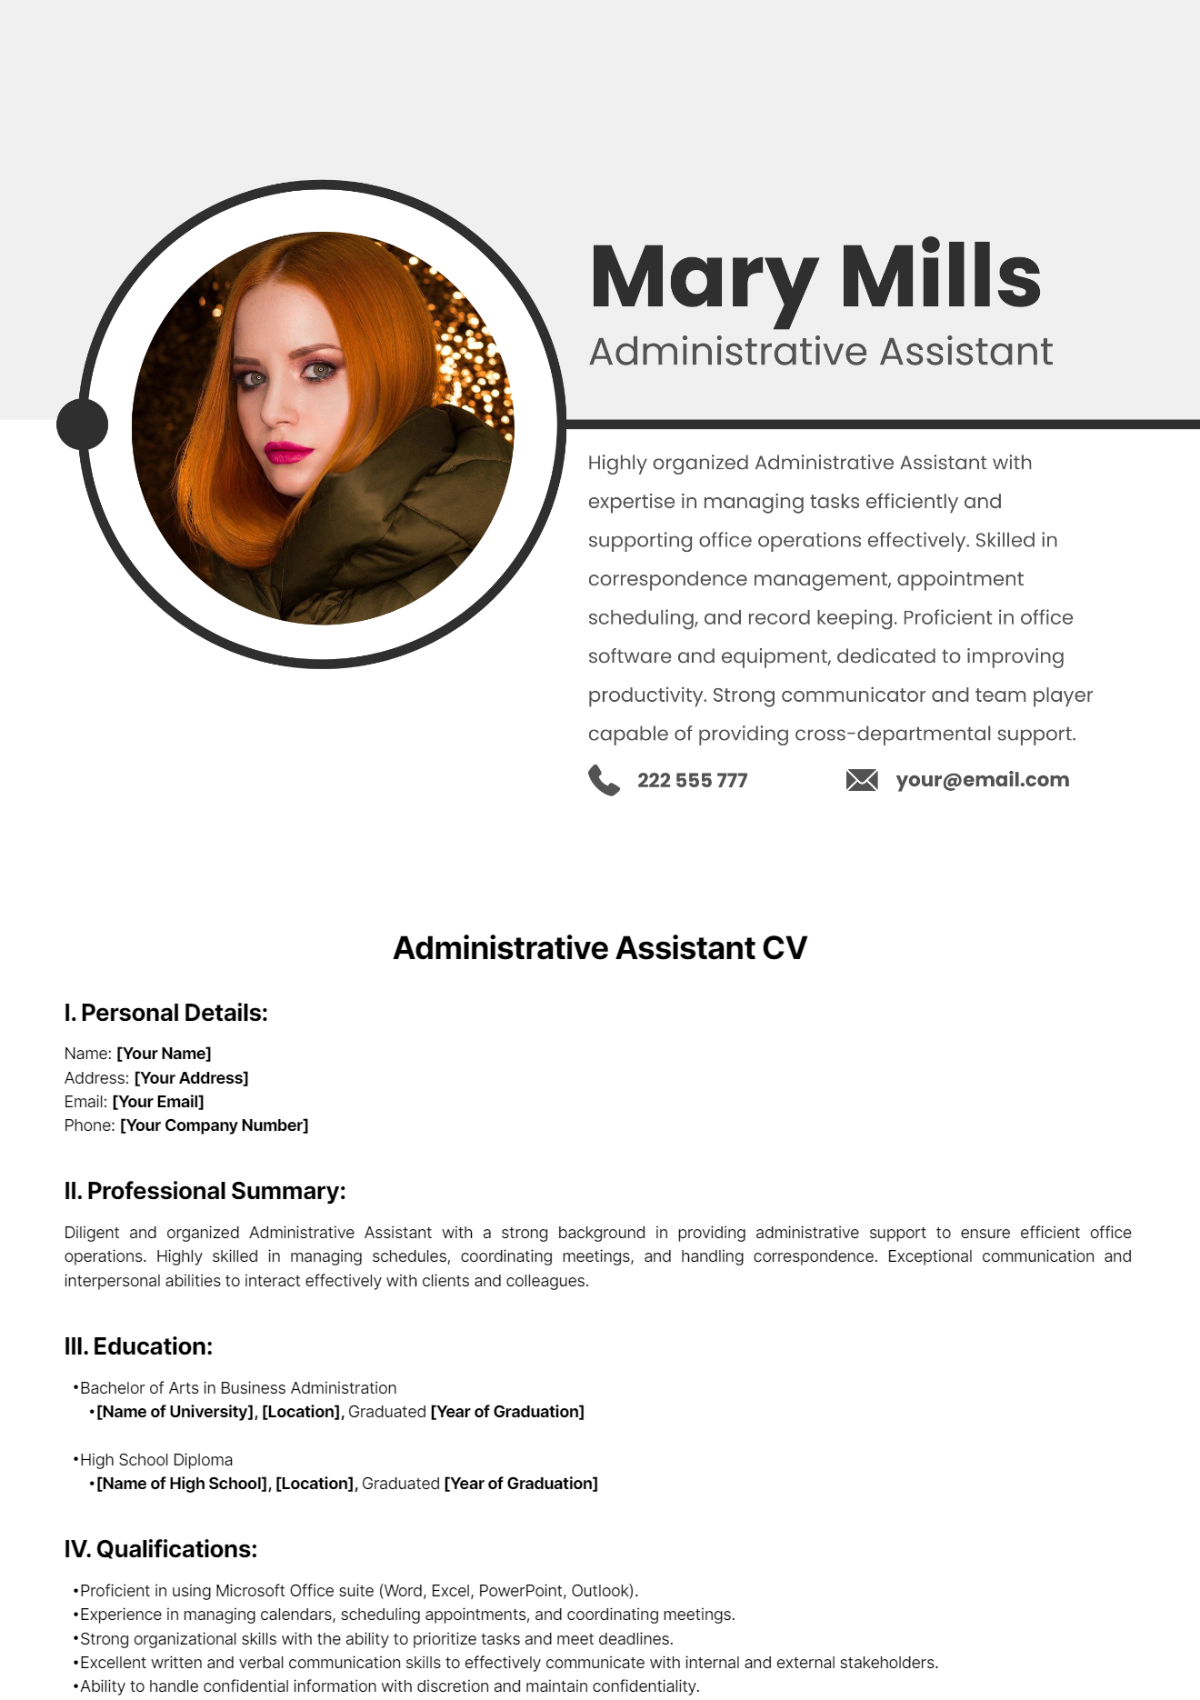 Administrative Assistant CV Template